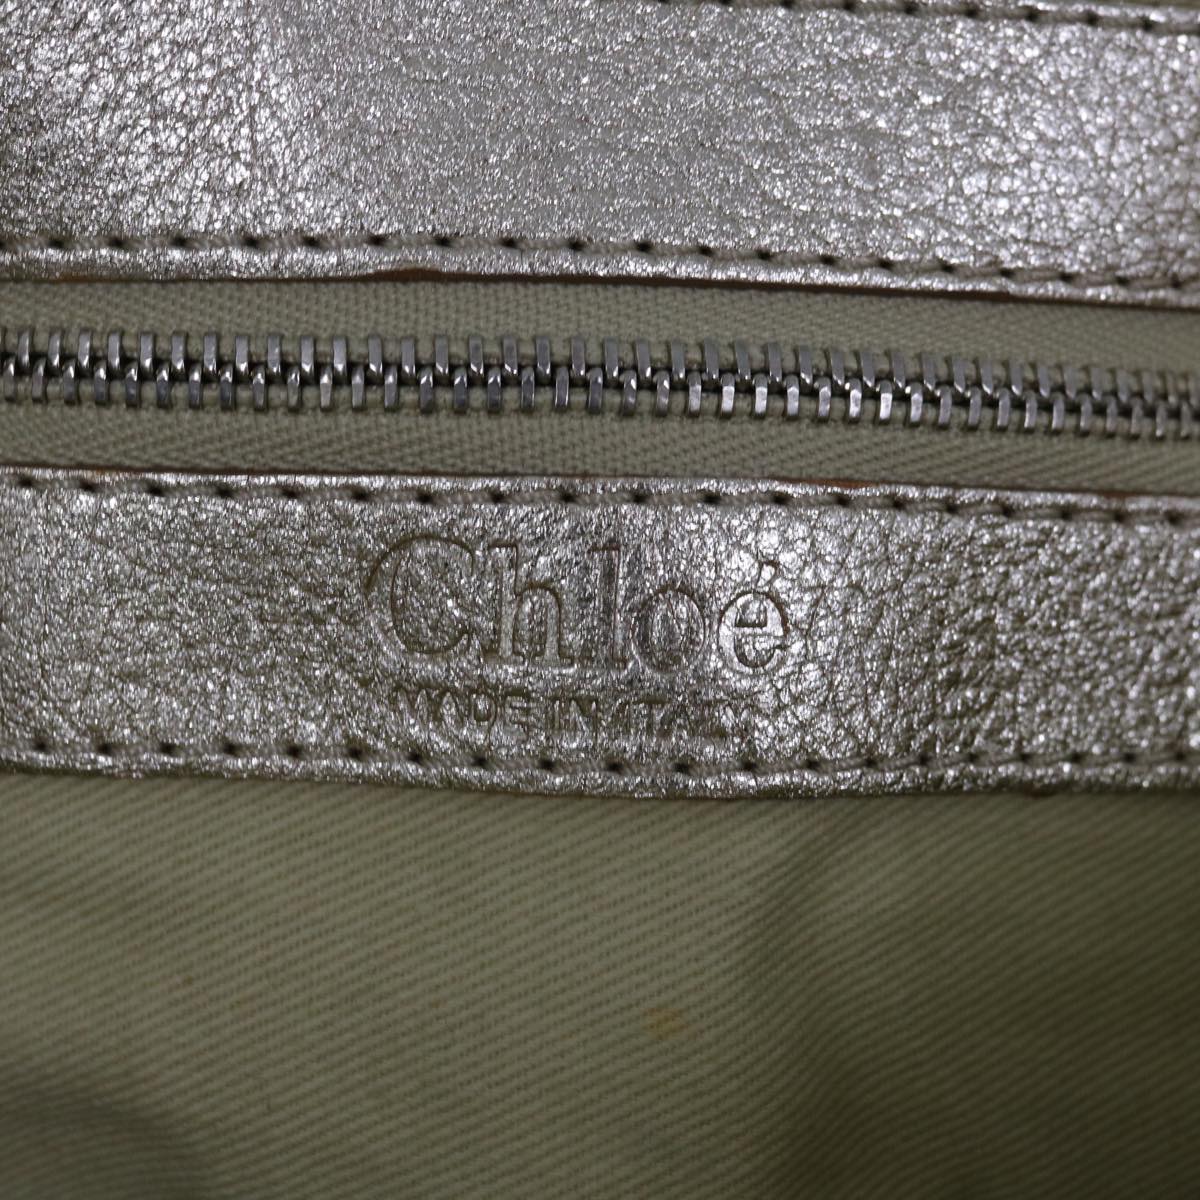 Chloe Paddington Hand Bag Leather Gold Tone 01 06 53 Auth yk10507